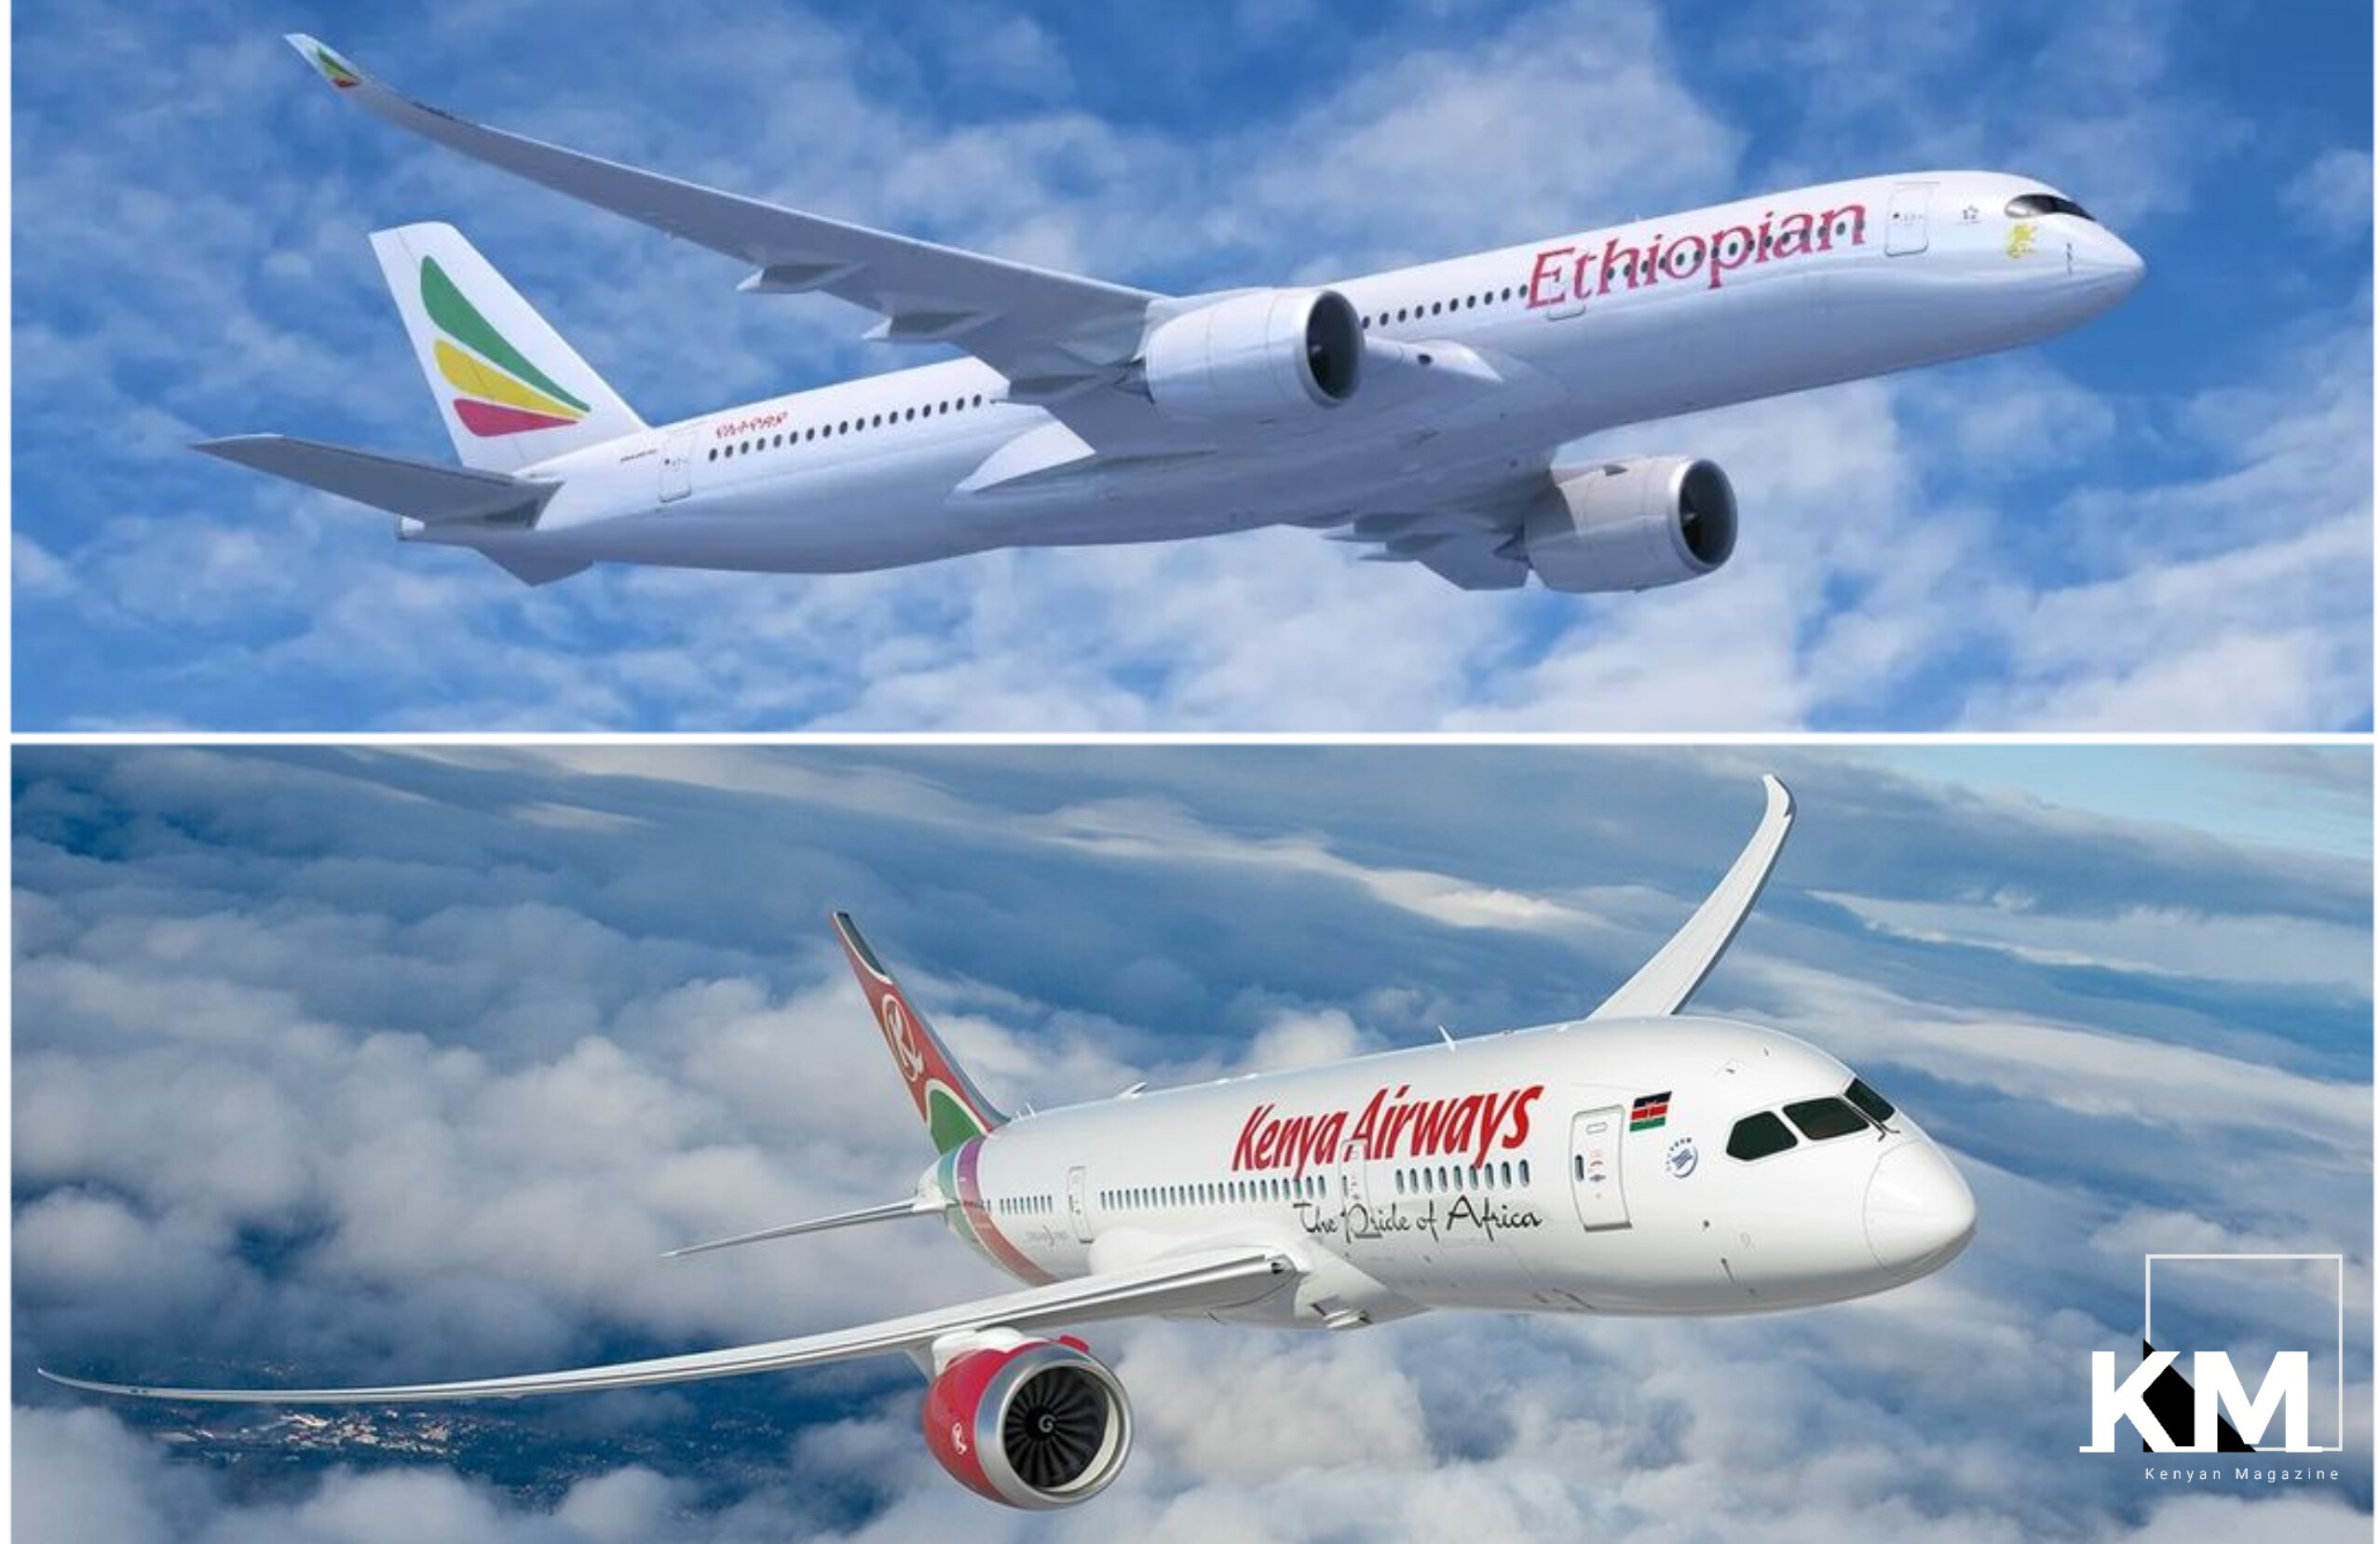 Biggest Airlines in Africa